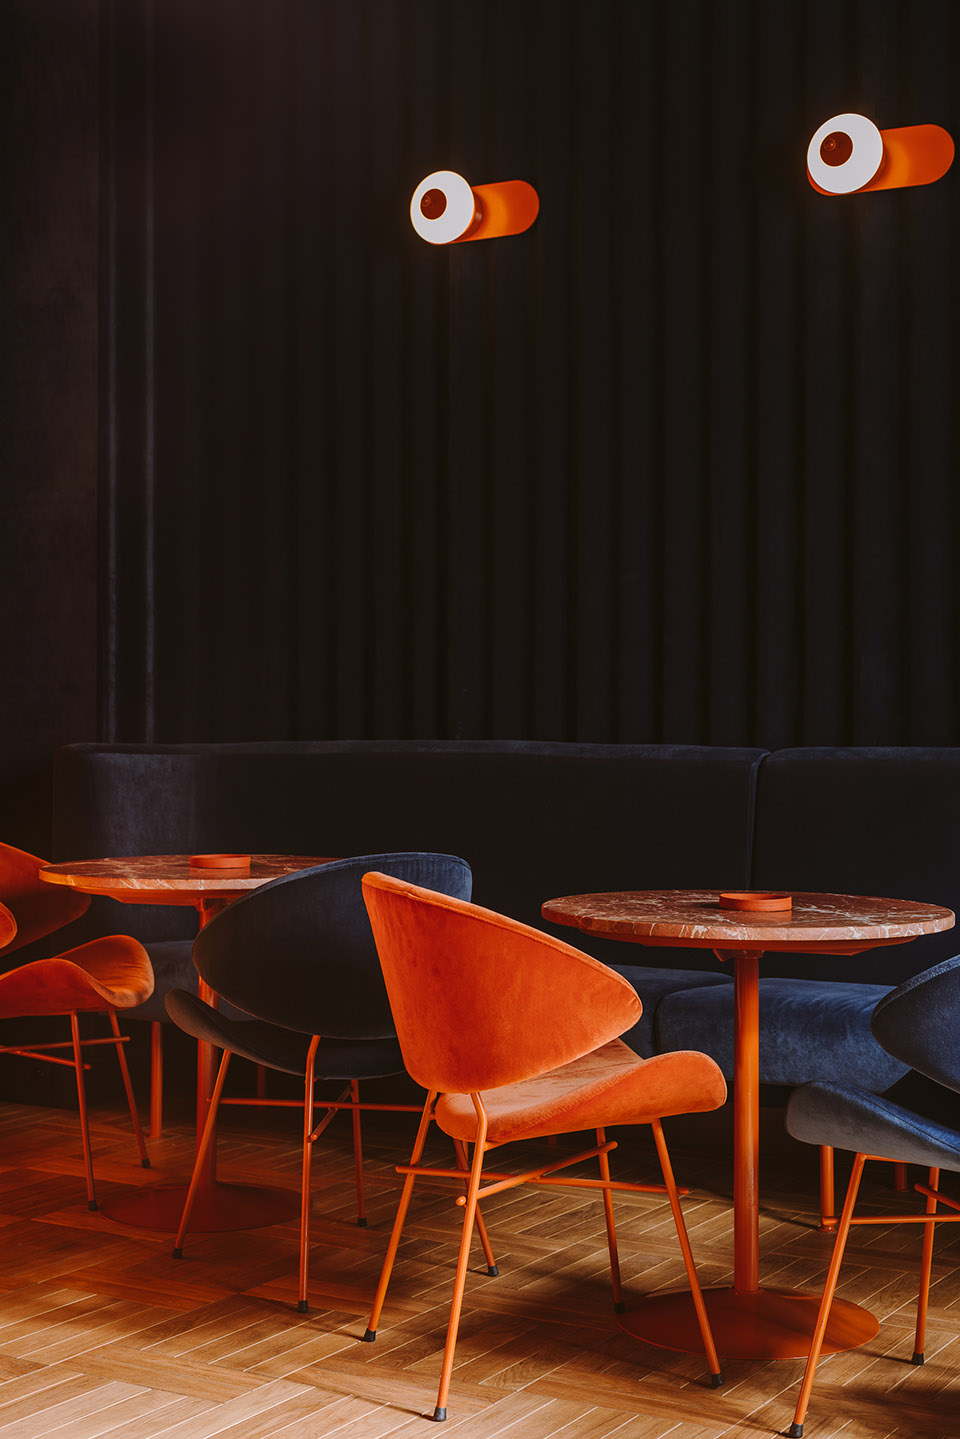 OPASLY TOM餐厅，华沙/丰富的色彩、饰面和纹理空间下的用餐体验-80